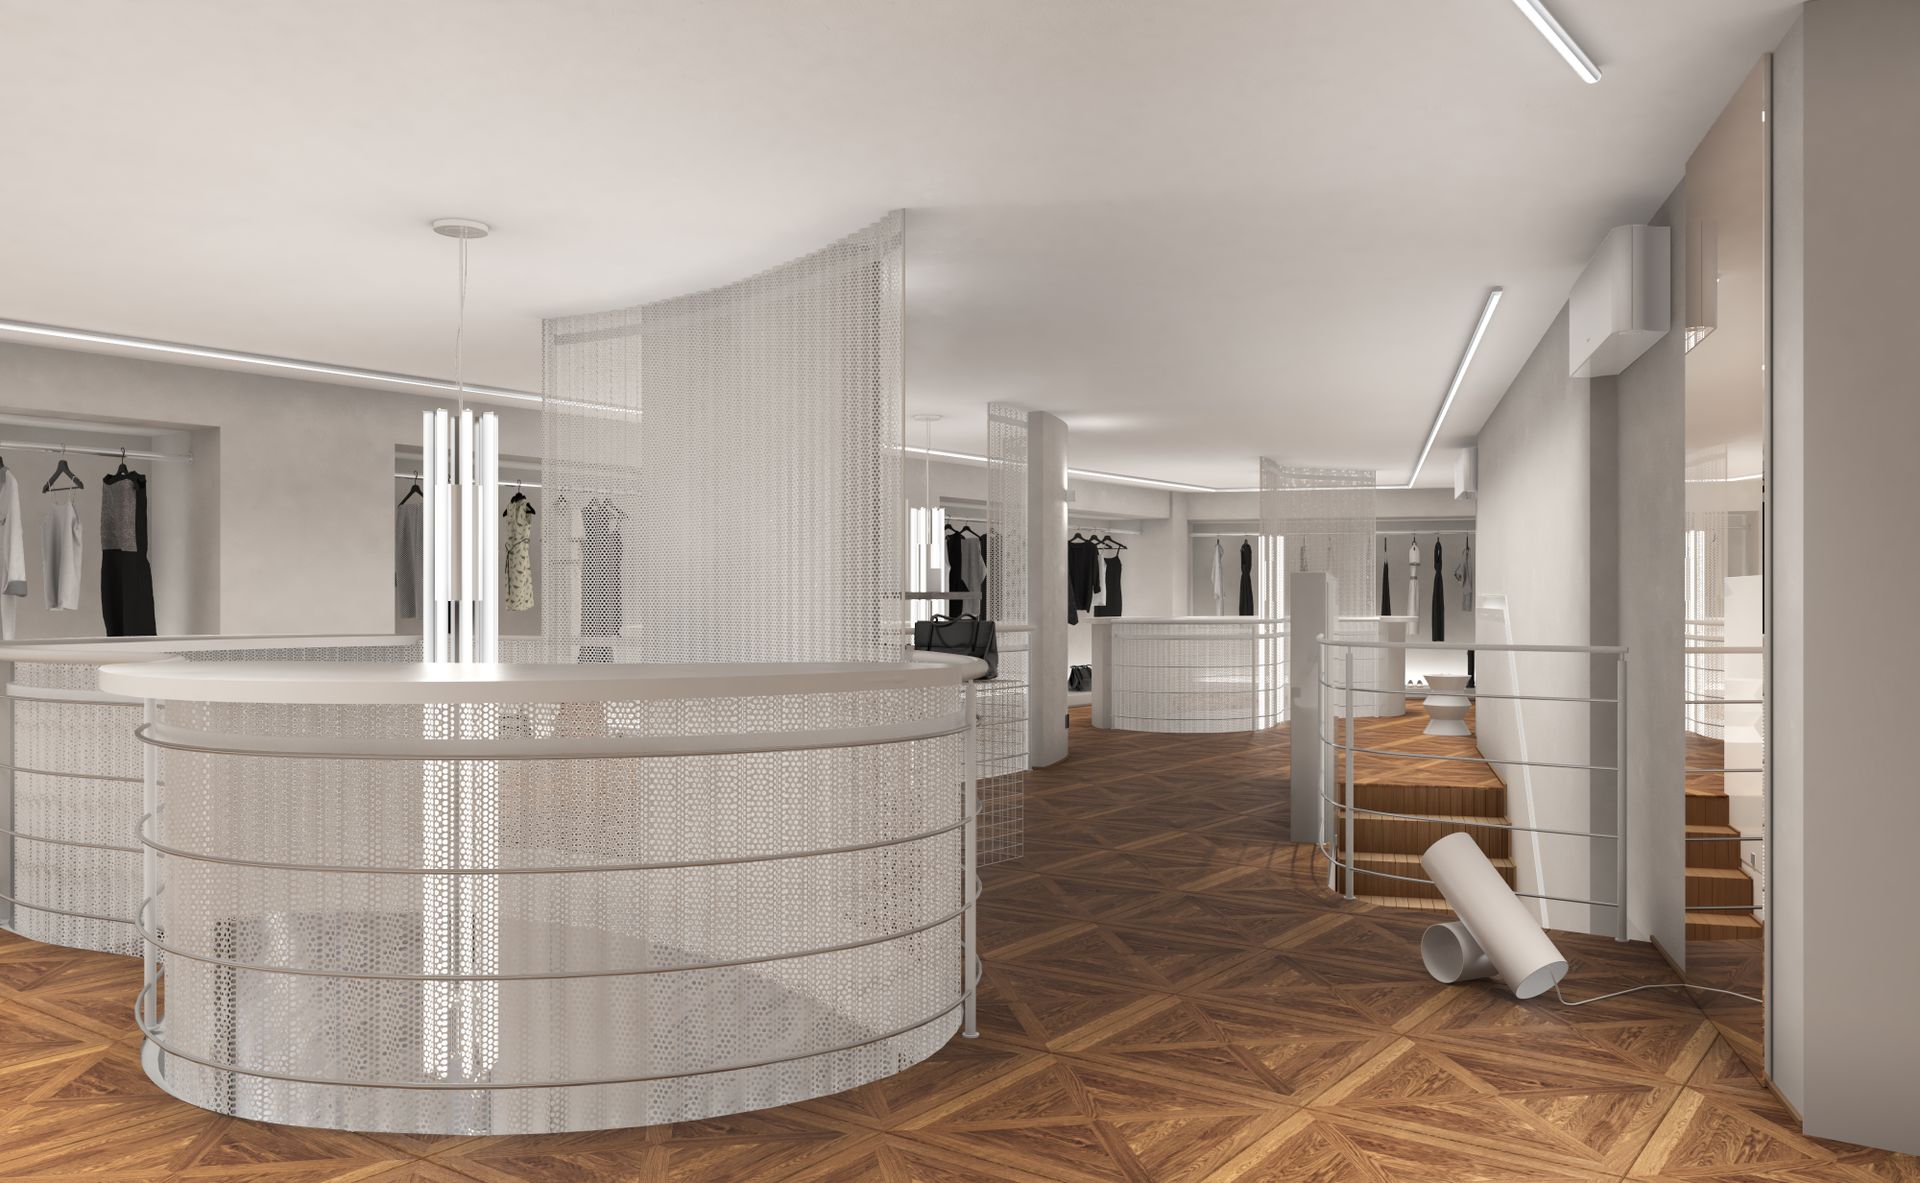 Interior design project, boutique remodeling and rebranding luxury fashion clothing Bergamo, Milan, Lake Como, London, New York, Paris. Officina Magisafi architecture design - first floor rendering